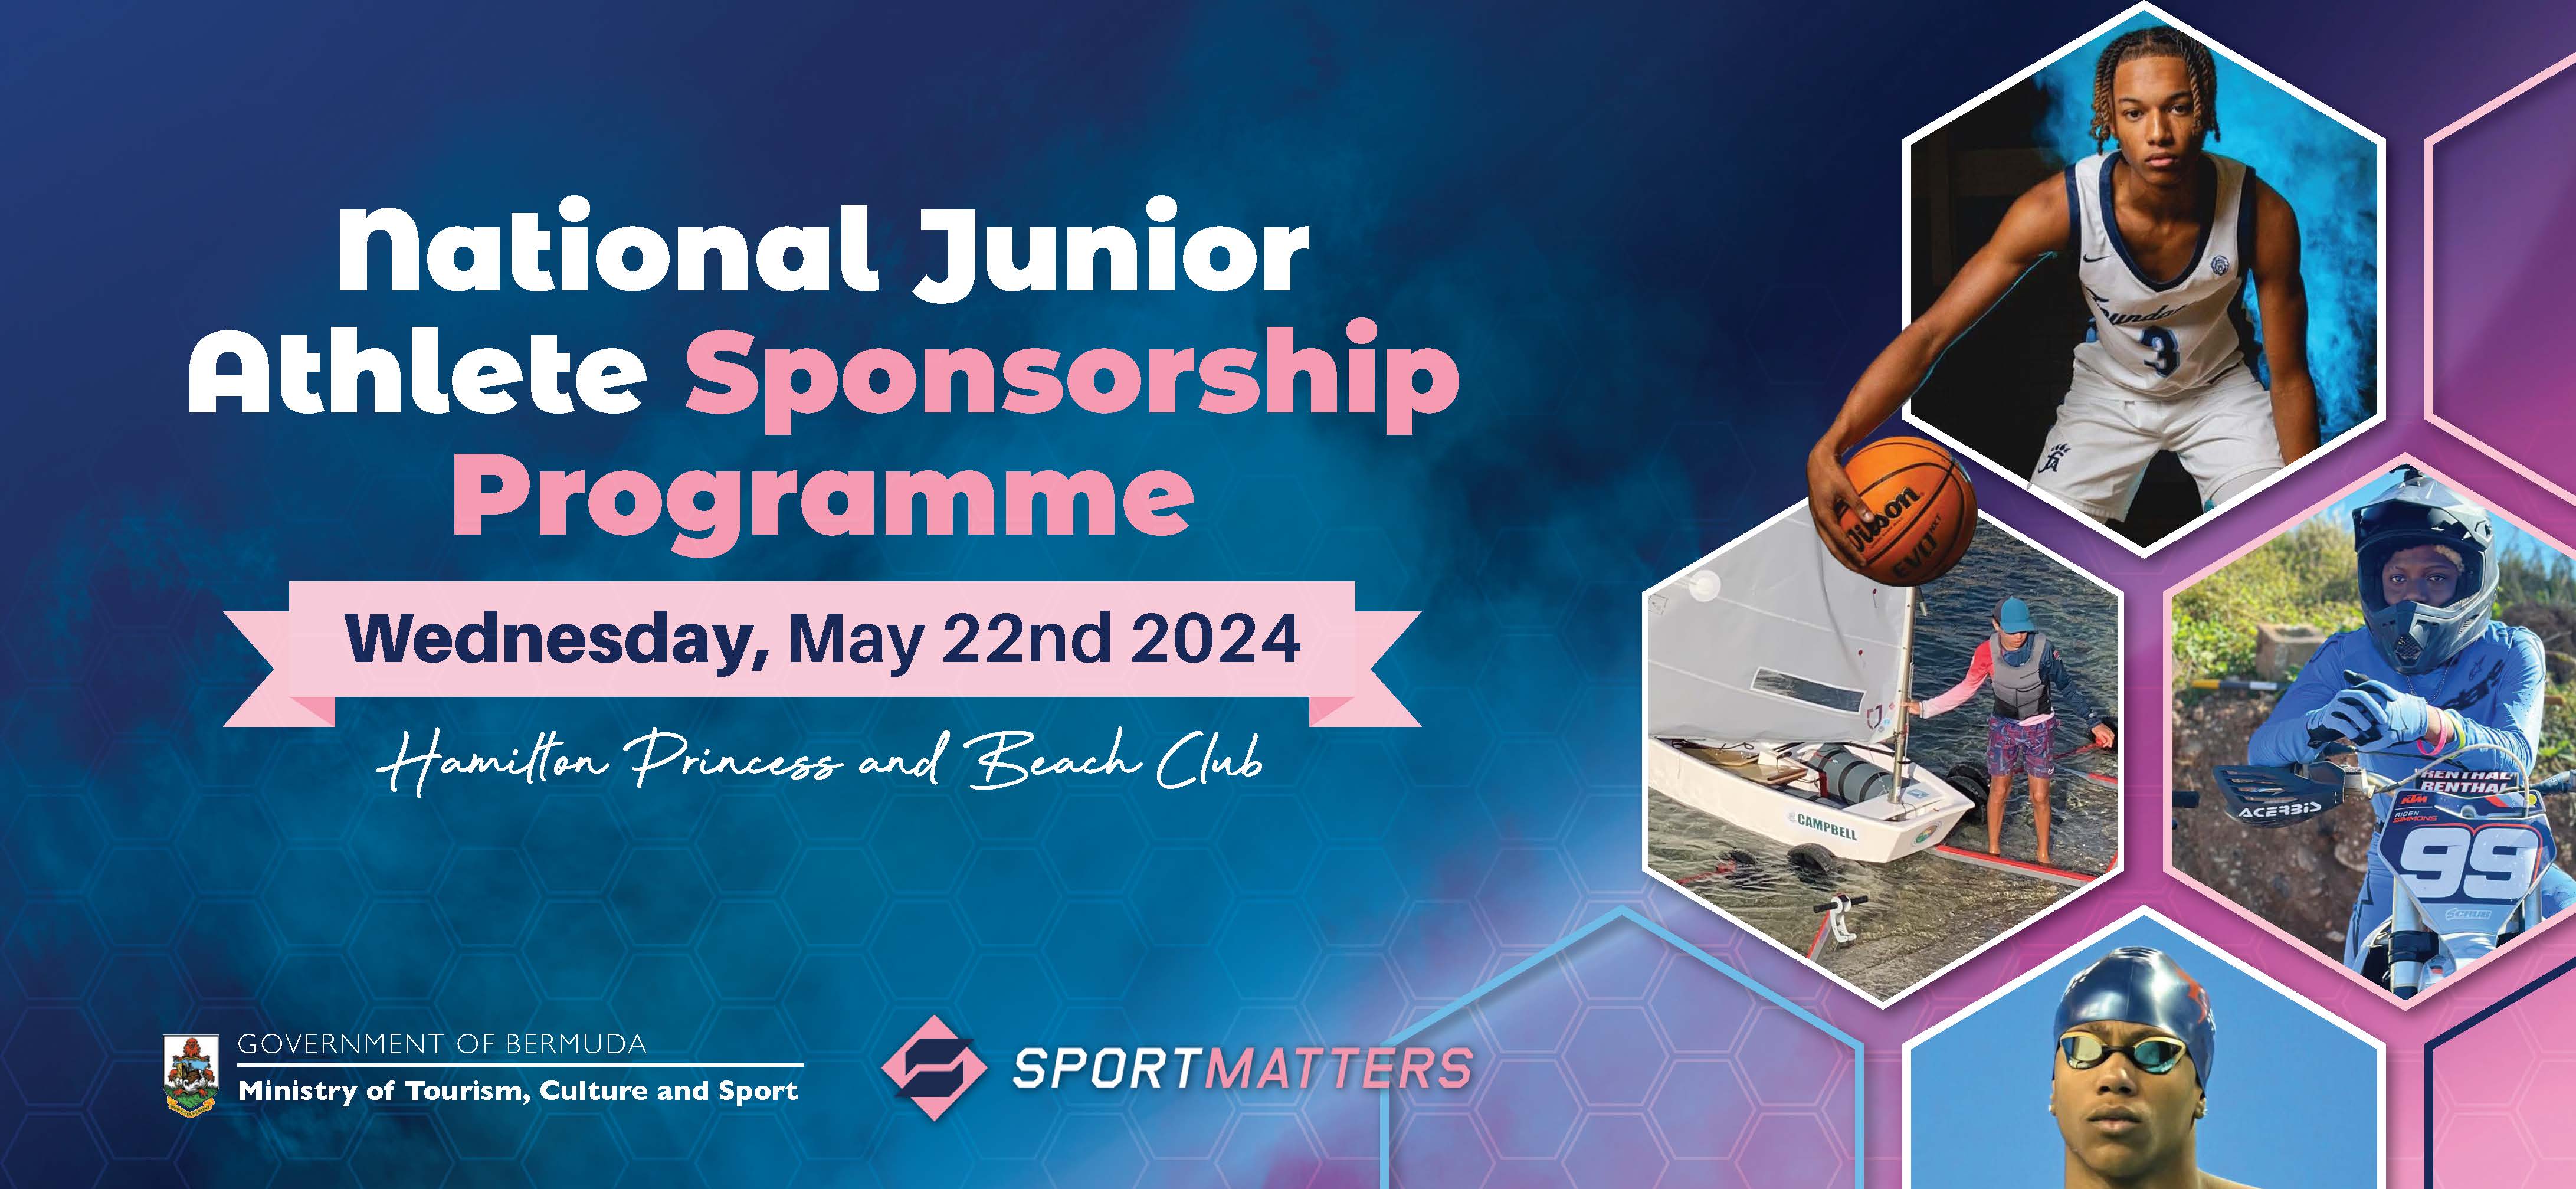 National Junior Athlete Sponsorship Programme image